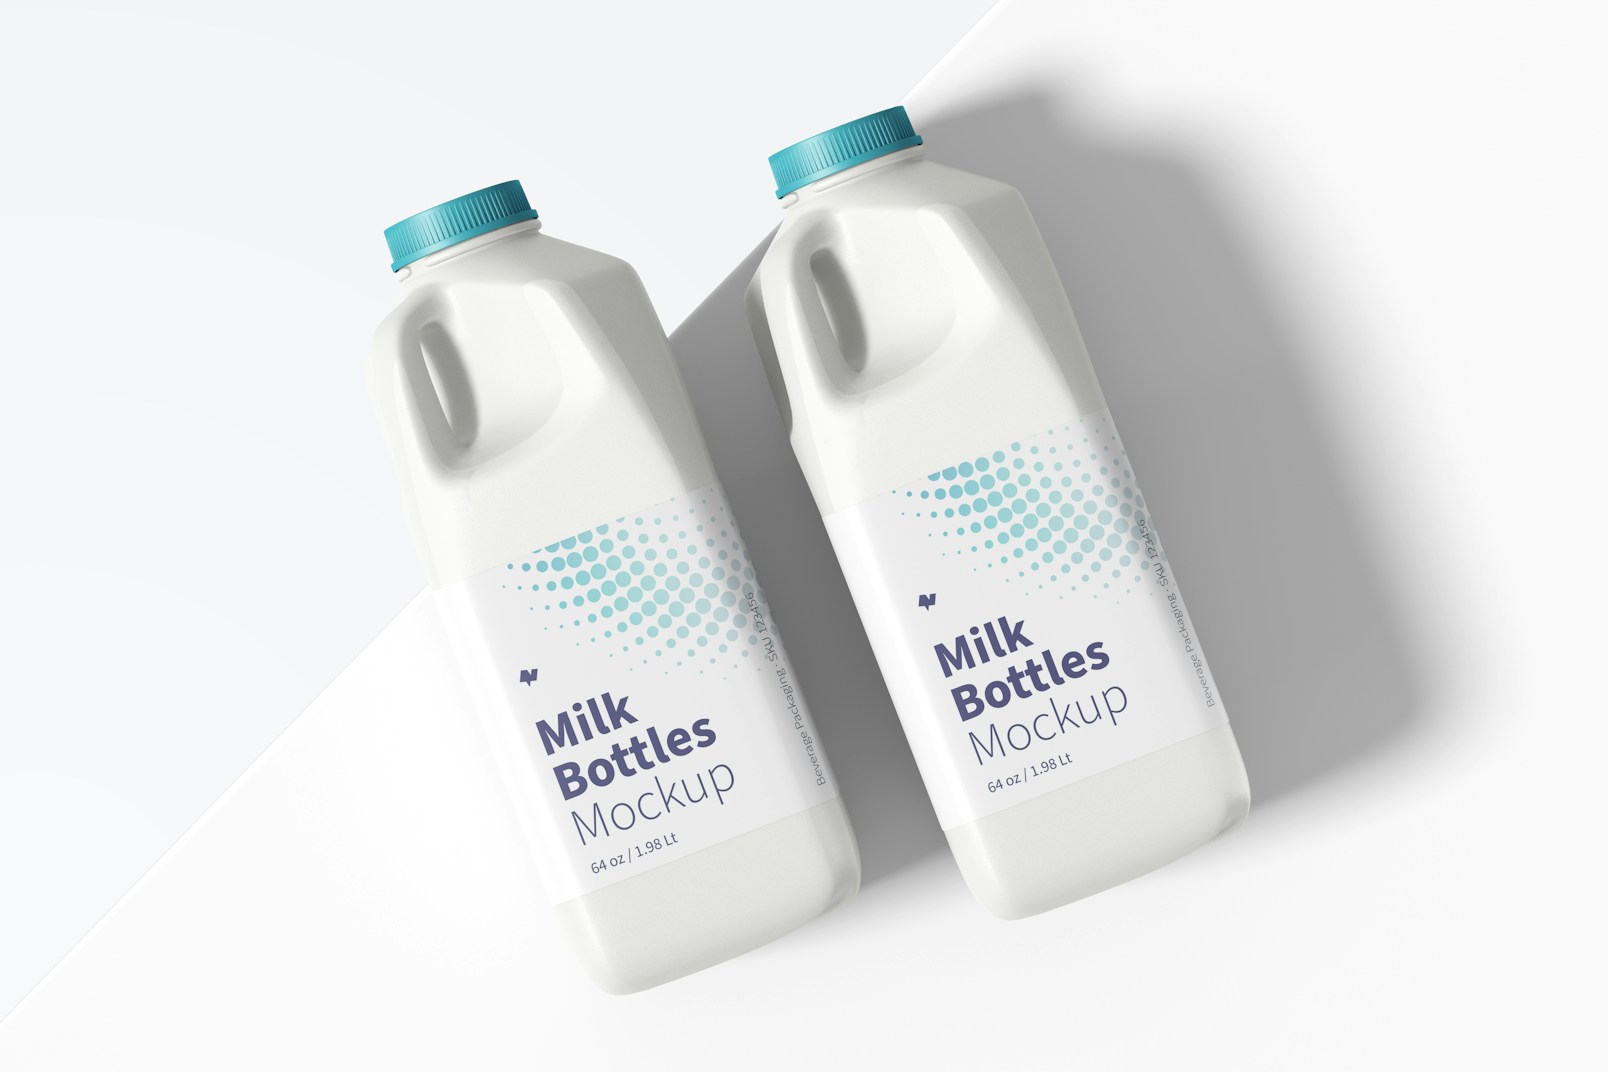 64 oz Milk Bottles Mockup, Top View